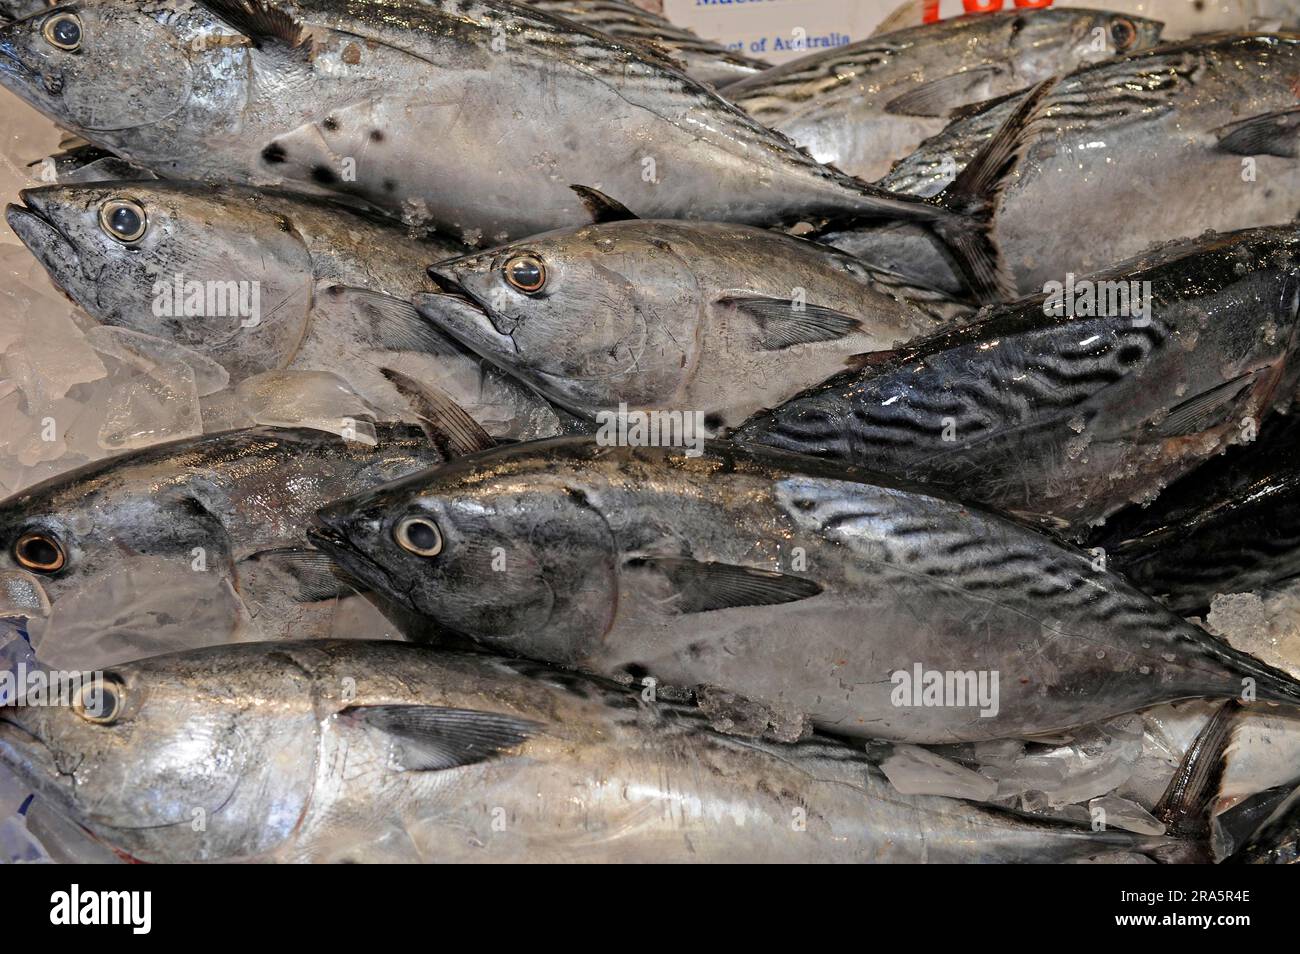 Chub (Scomber japonicus) Mackerels, fish market, Sydney, New South Wales, Australia Stock Photo